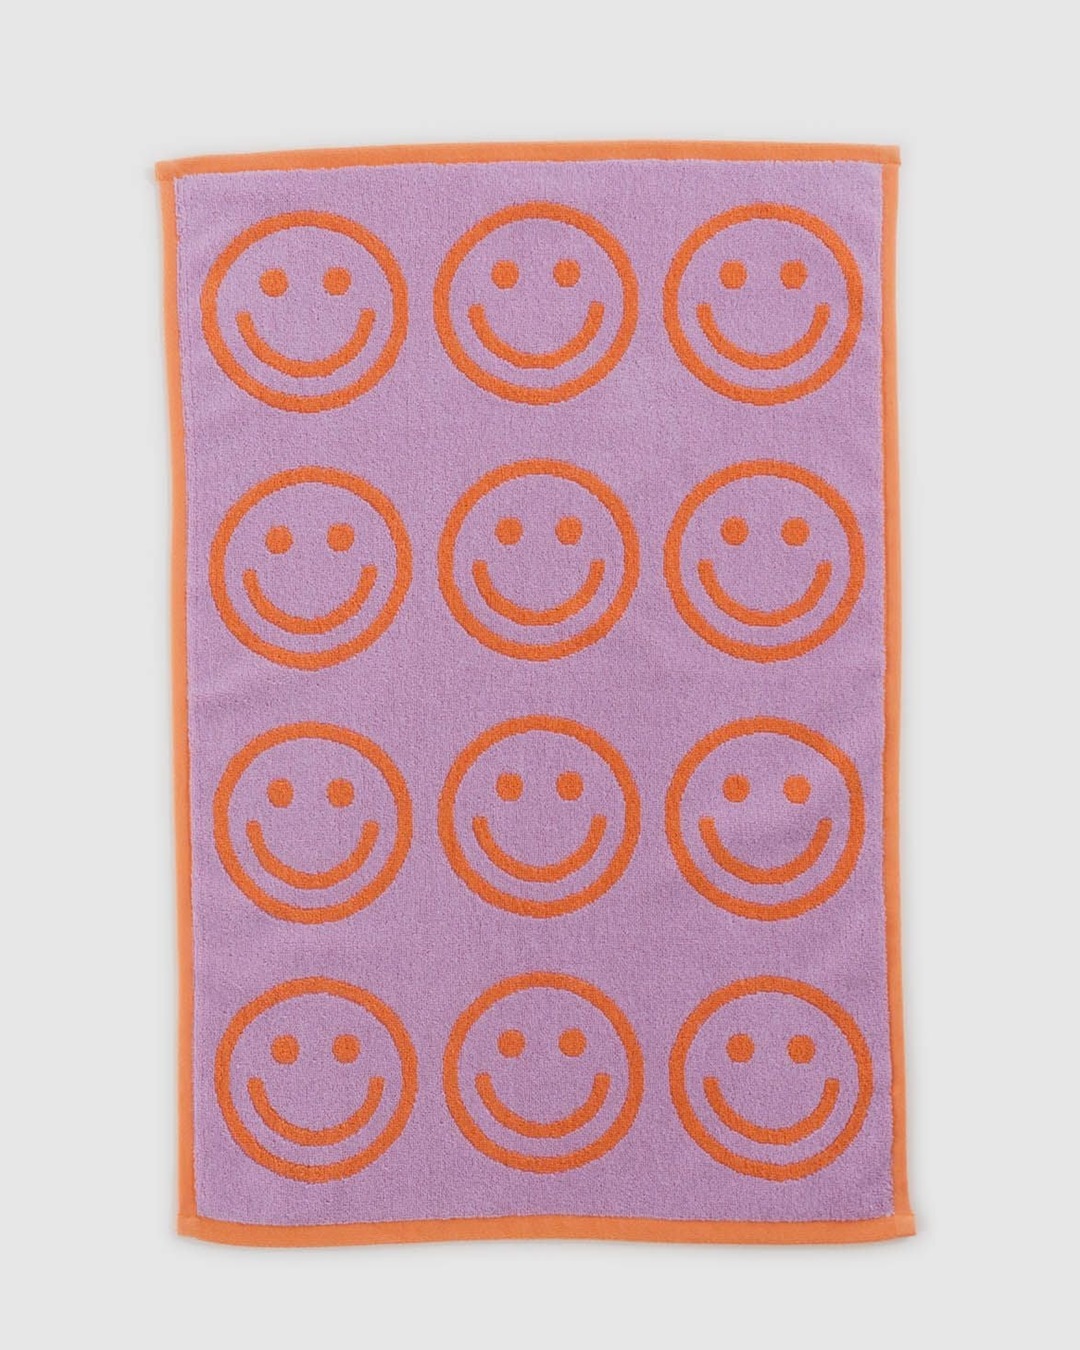 Orange and purple smiley face towel